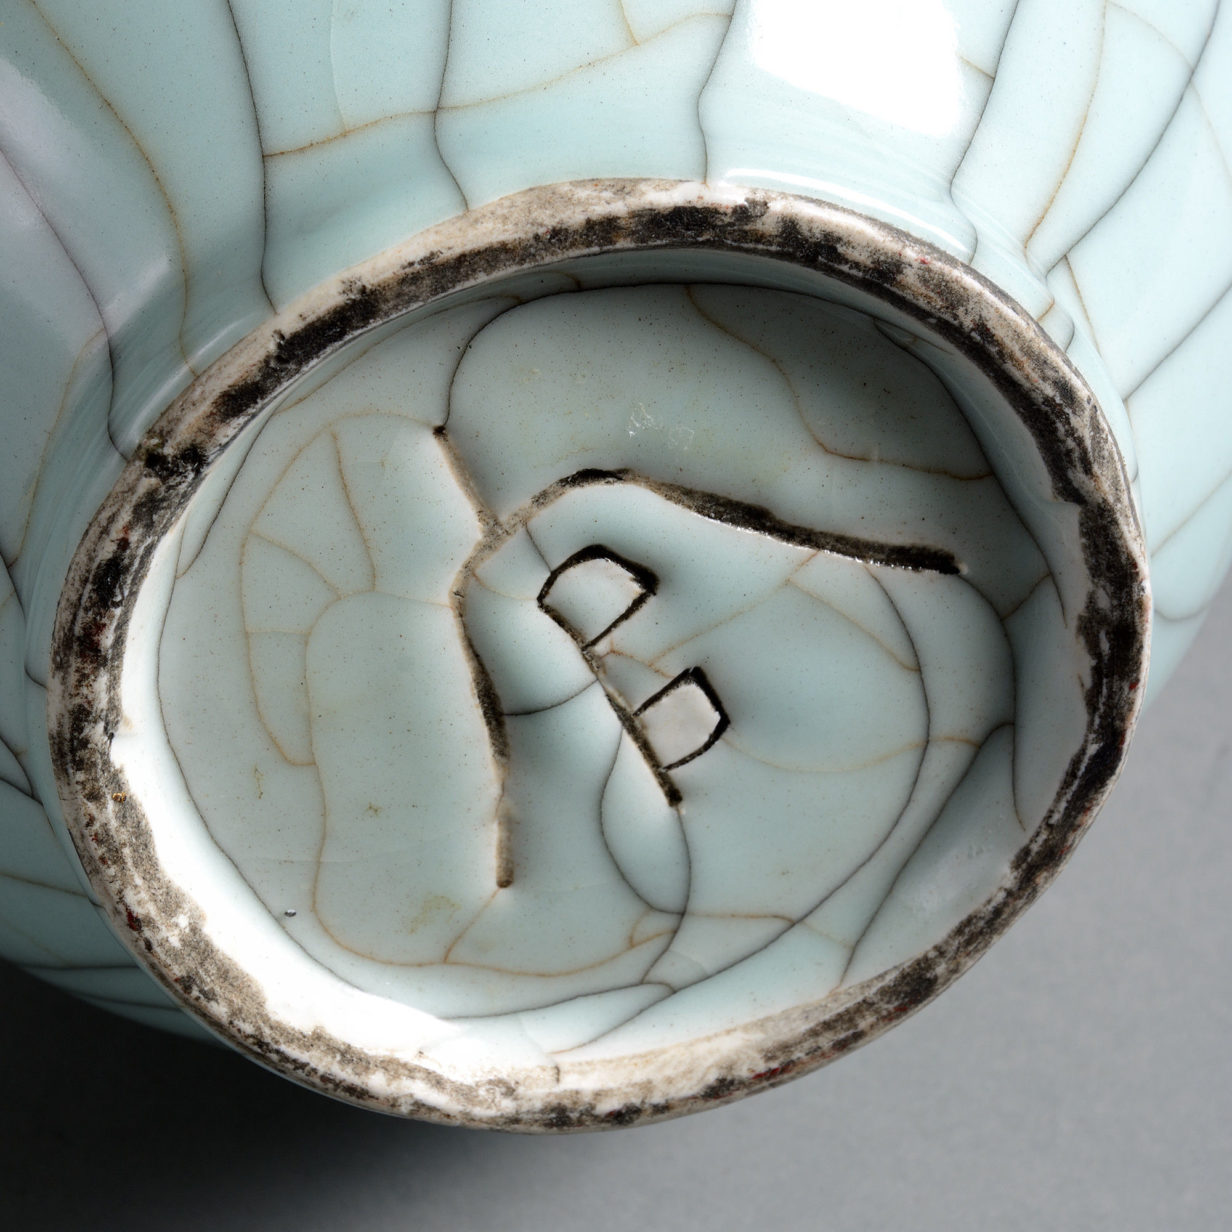 A 19th century qing dynasty celadon green vase